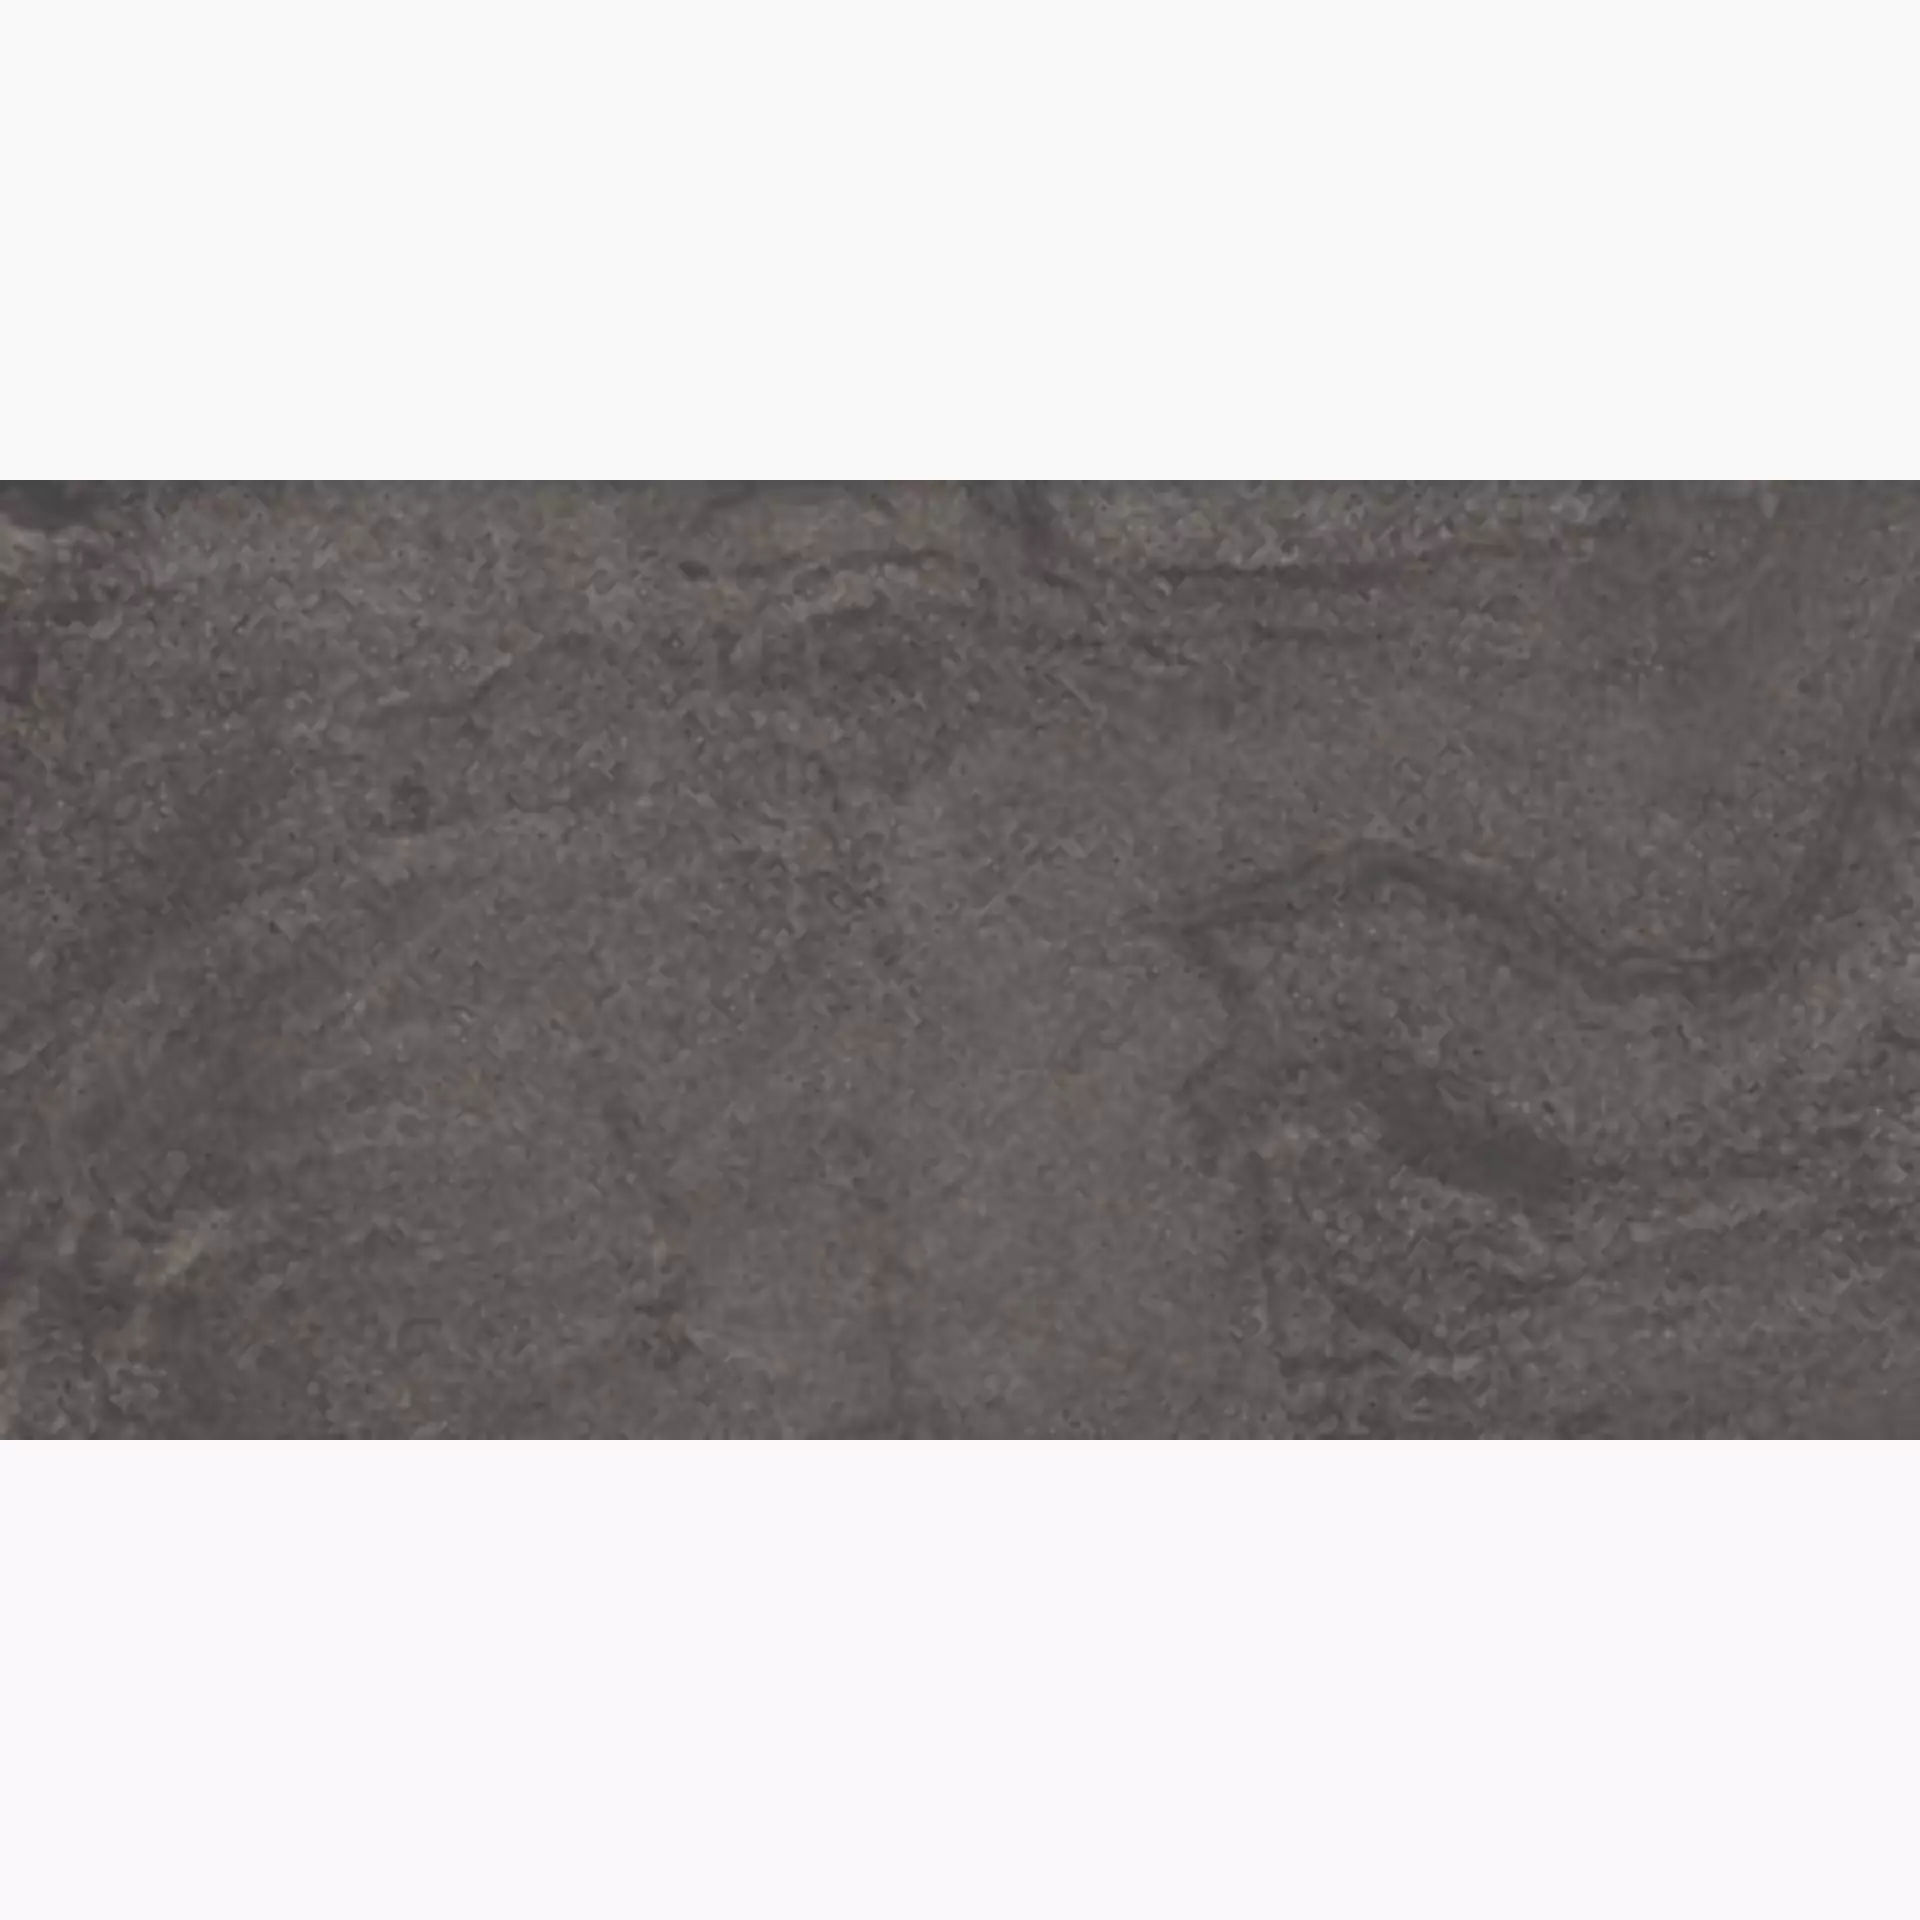 Diesel Diesel Liquid Stone Bronze Naturale – Matt Copribordo 728875 15x30cm 9mm